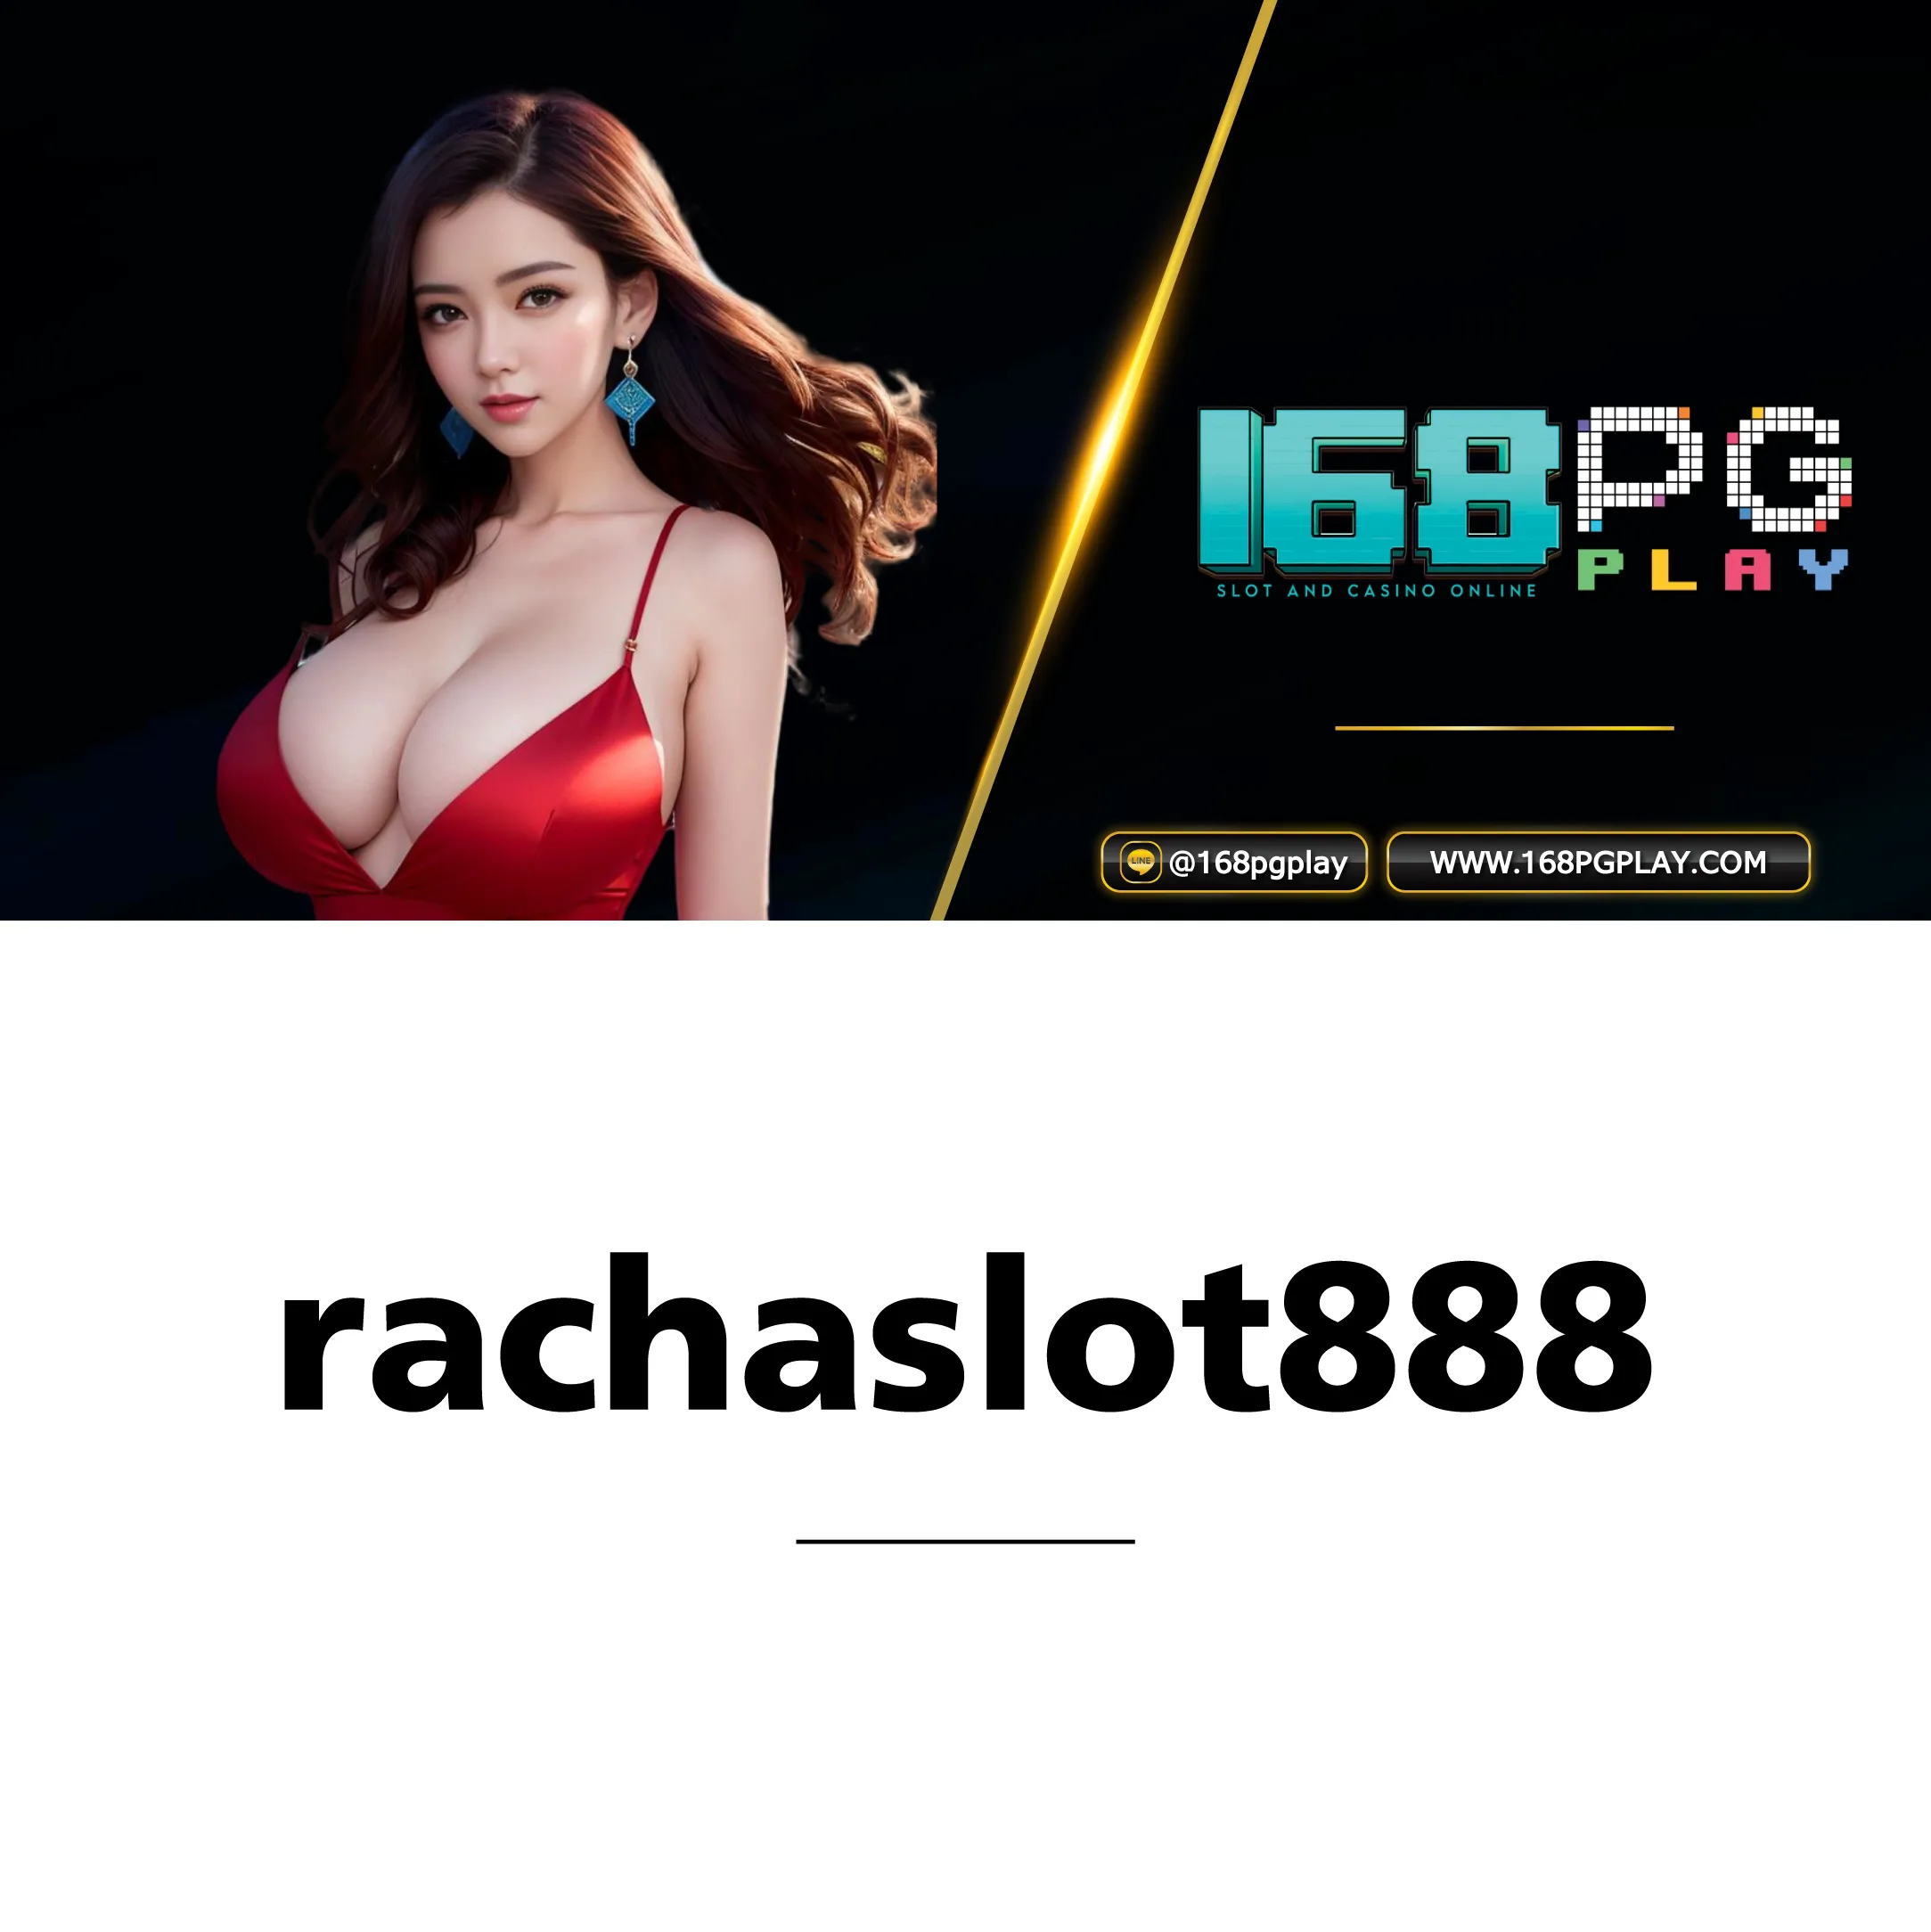 rachaslot888